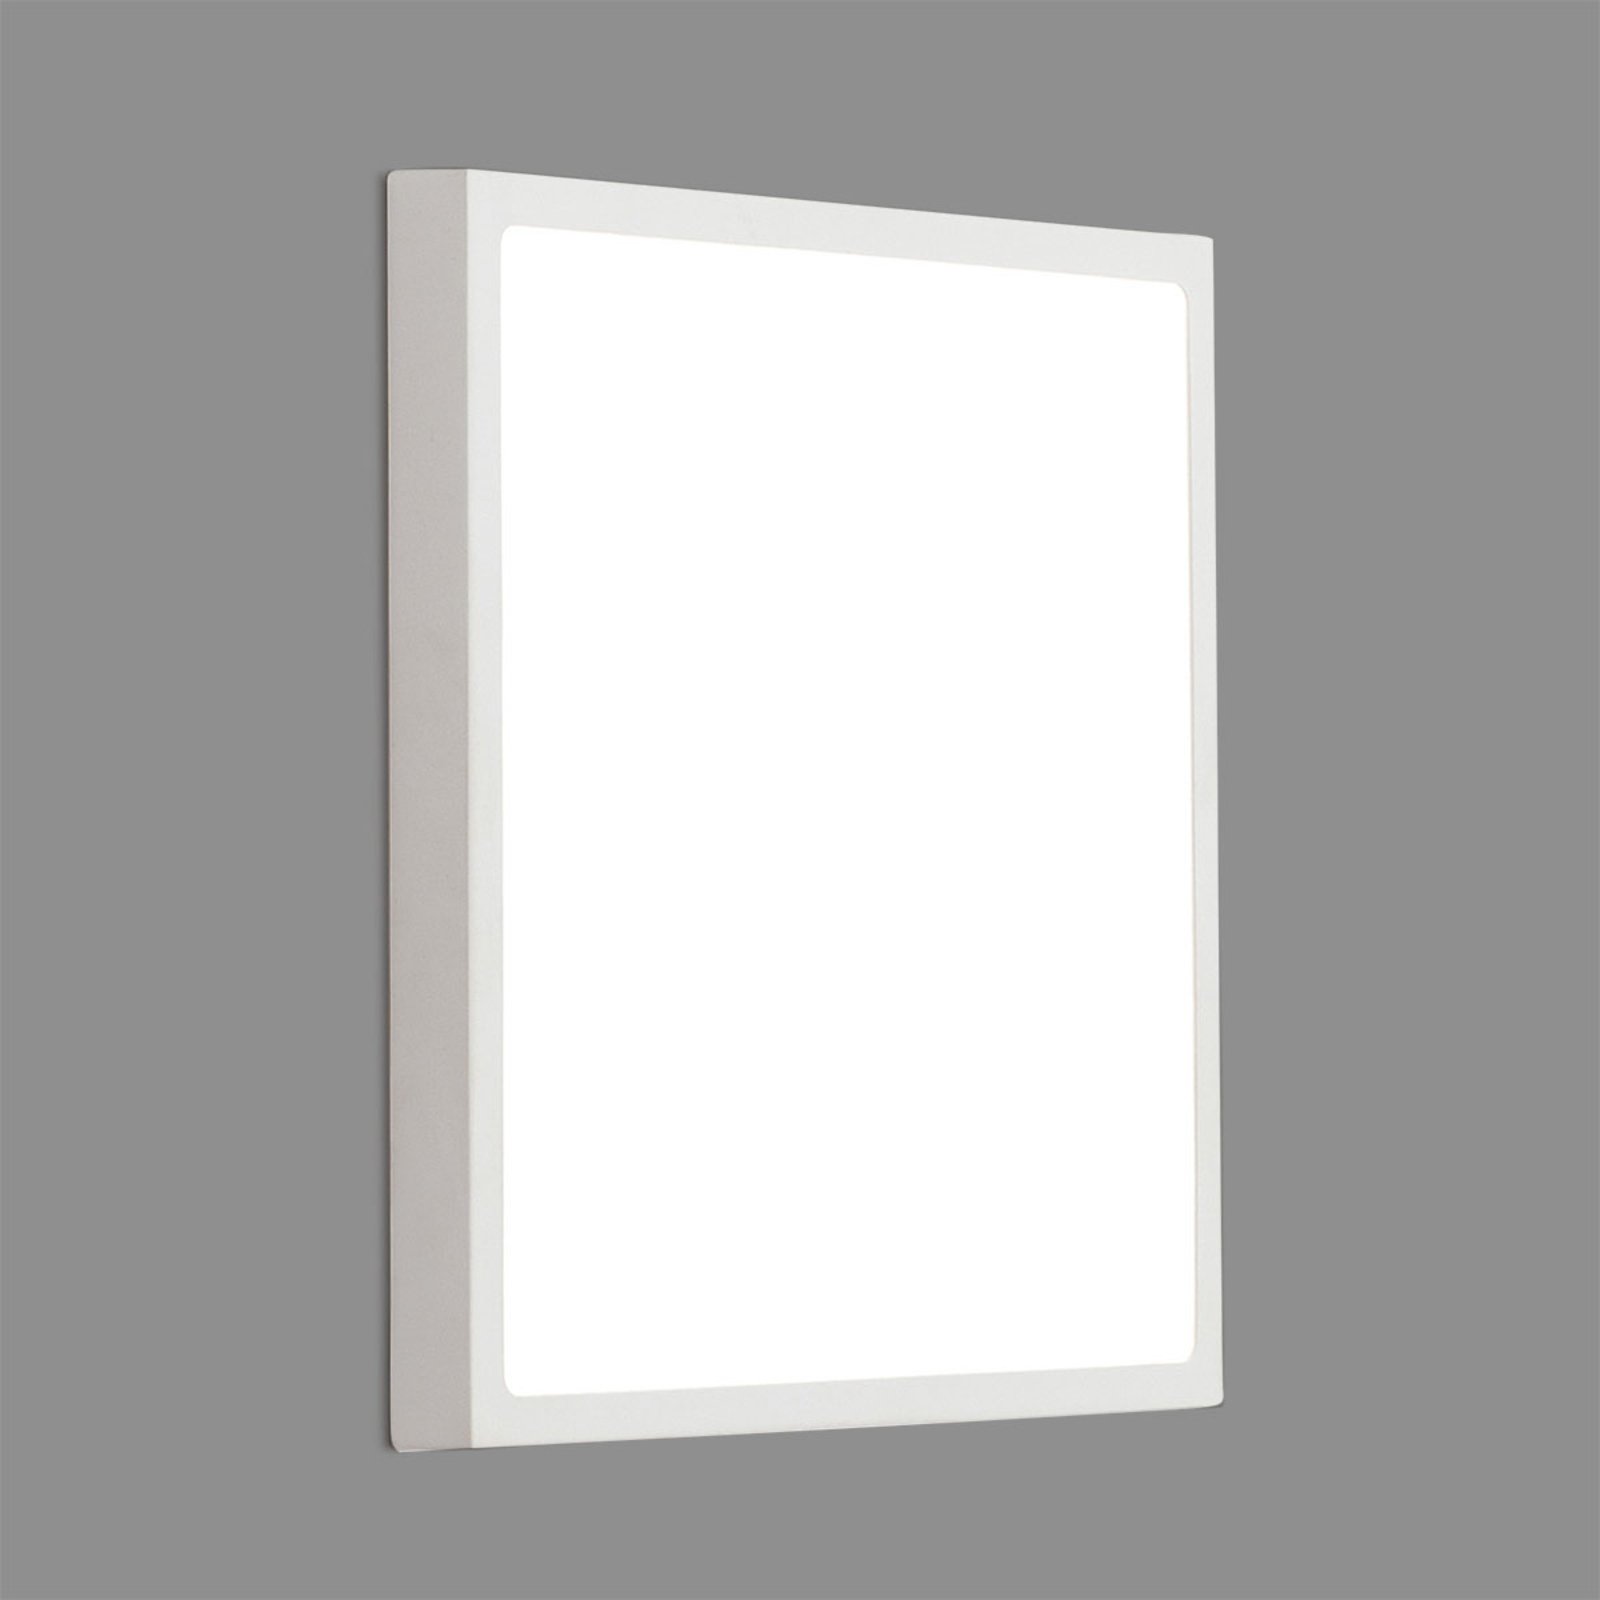 LED stenska svetilka Vika, kvadratna, bela, 30x30cm